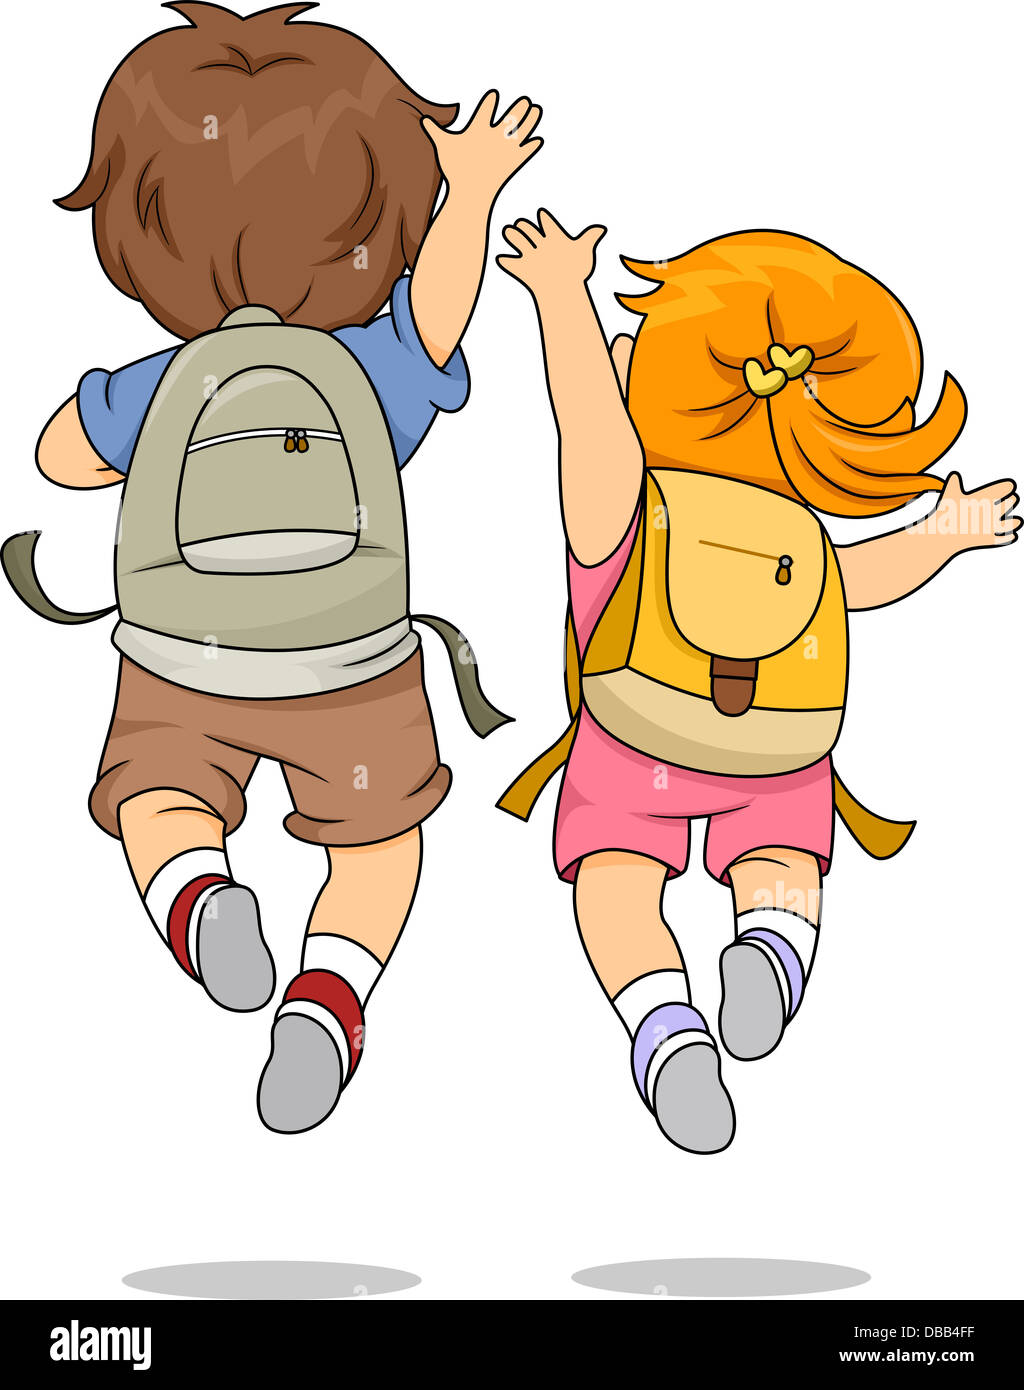 https://c8.alamy.com/comp/DBB4FF/back-view-illustration-of-little-male-and-female-kids-wearing-backpacks-DBB4FF.jpg